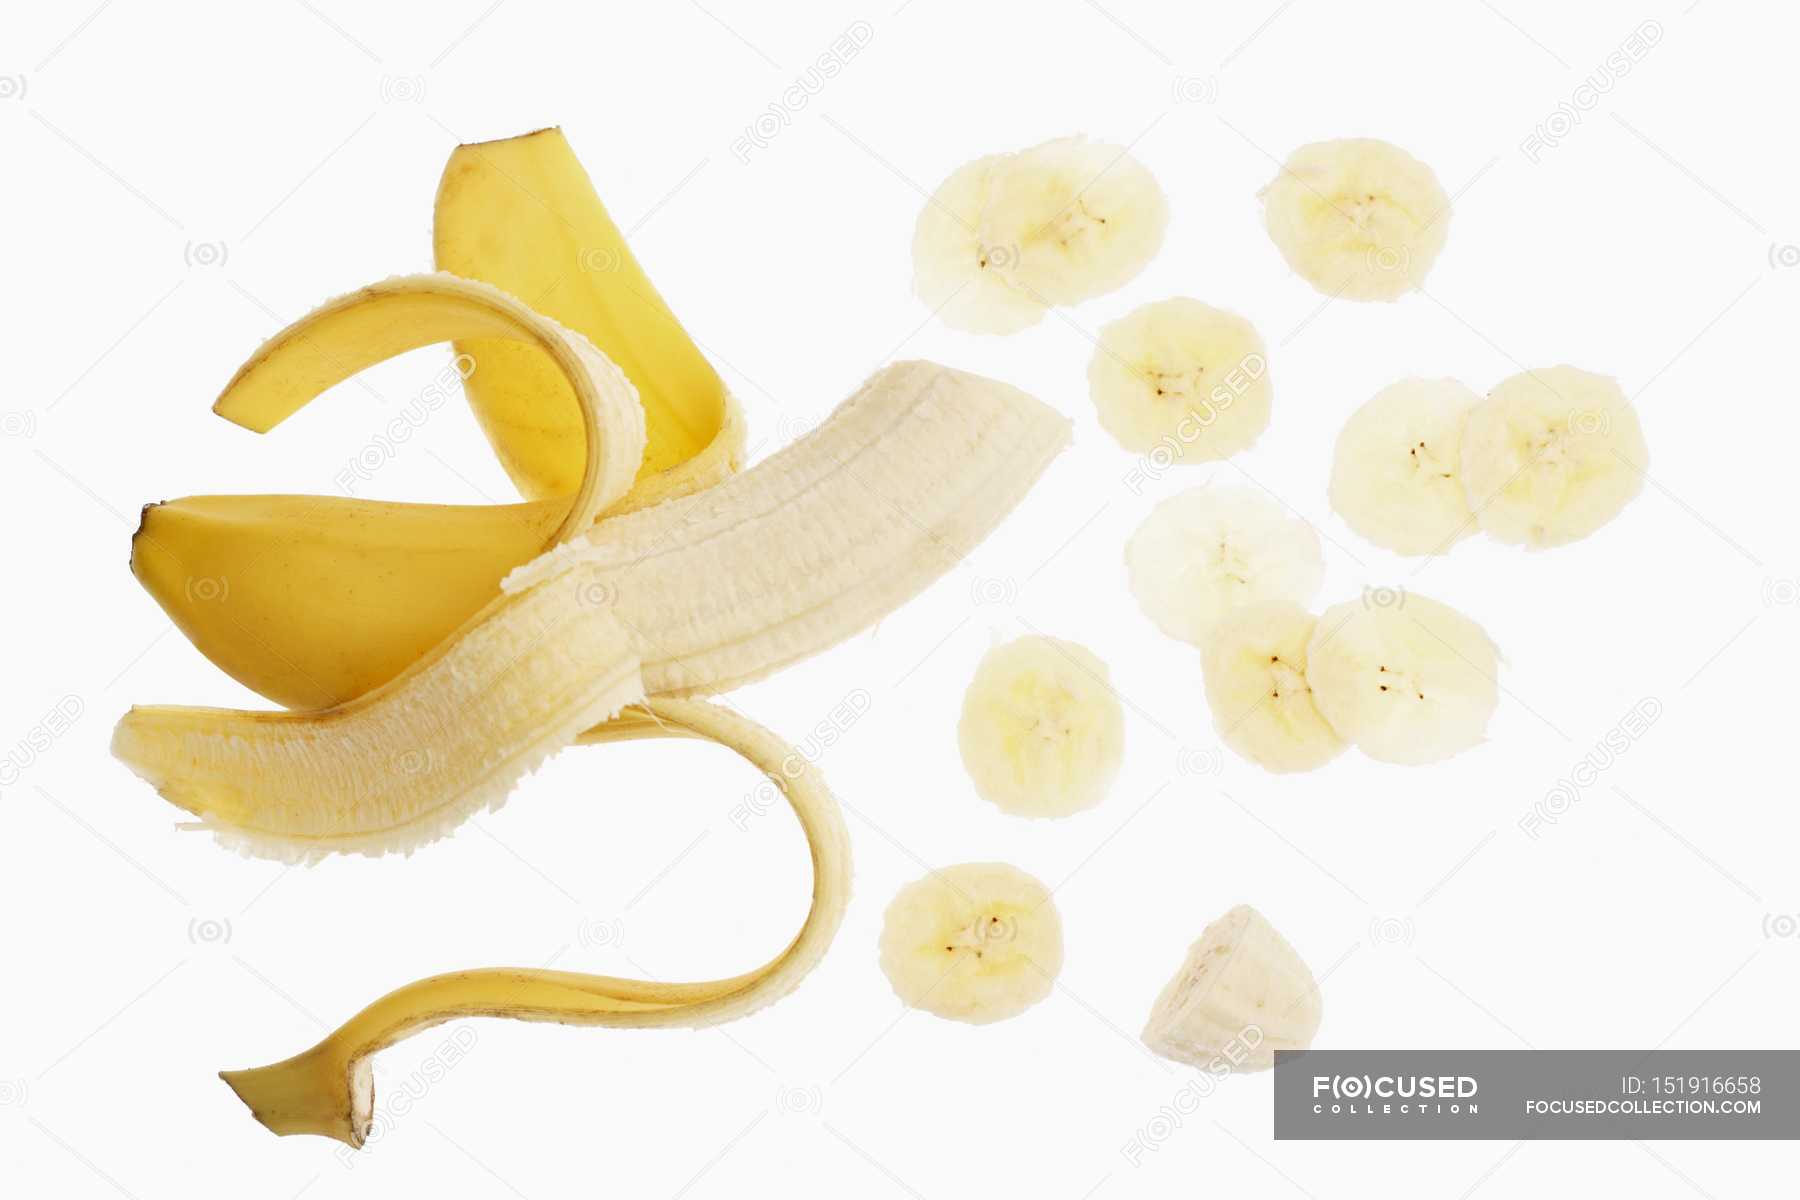 Half-peeled banana and slices — Stock Photo | #151916658